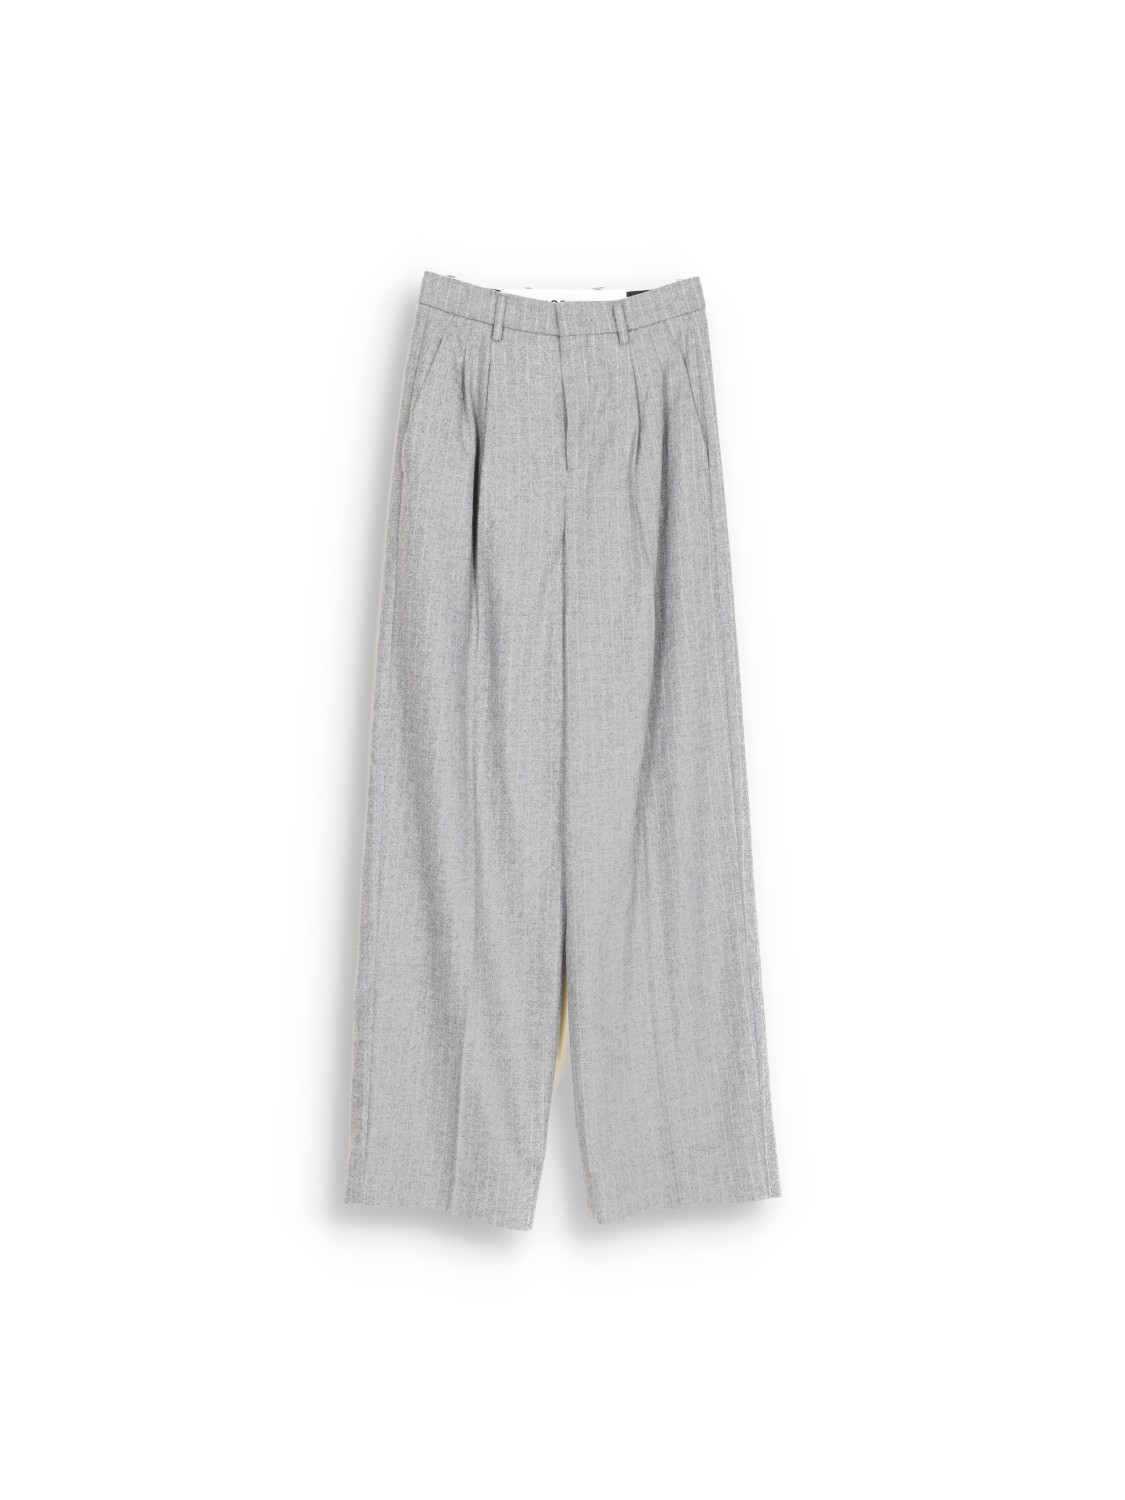 Noa - Pinstripe pants made of wool